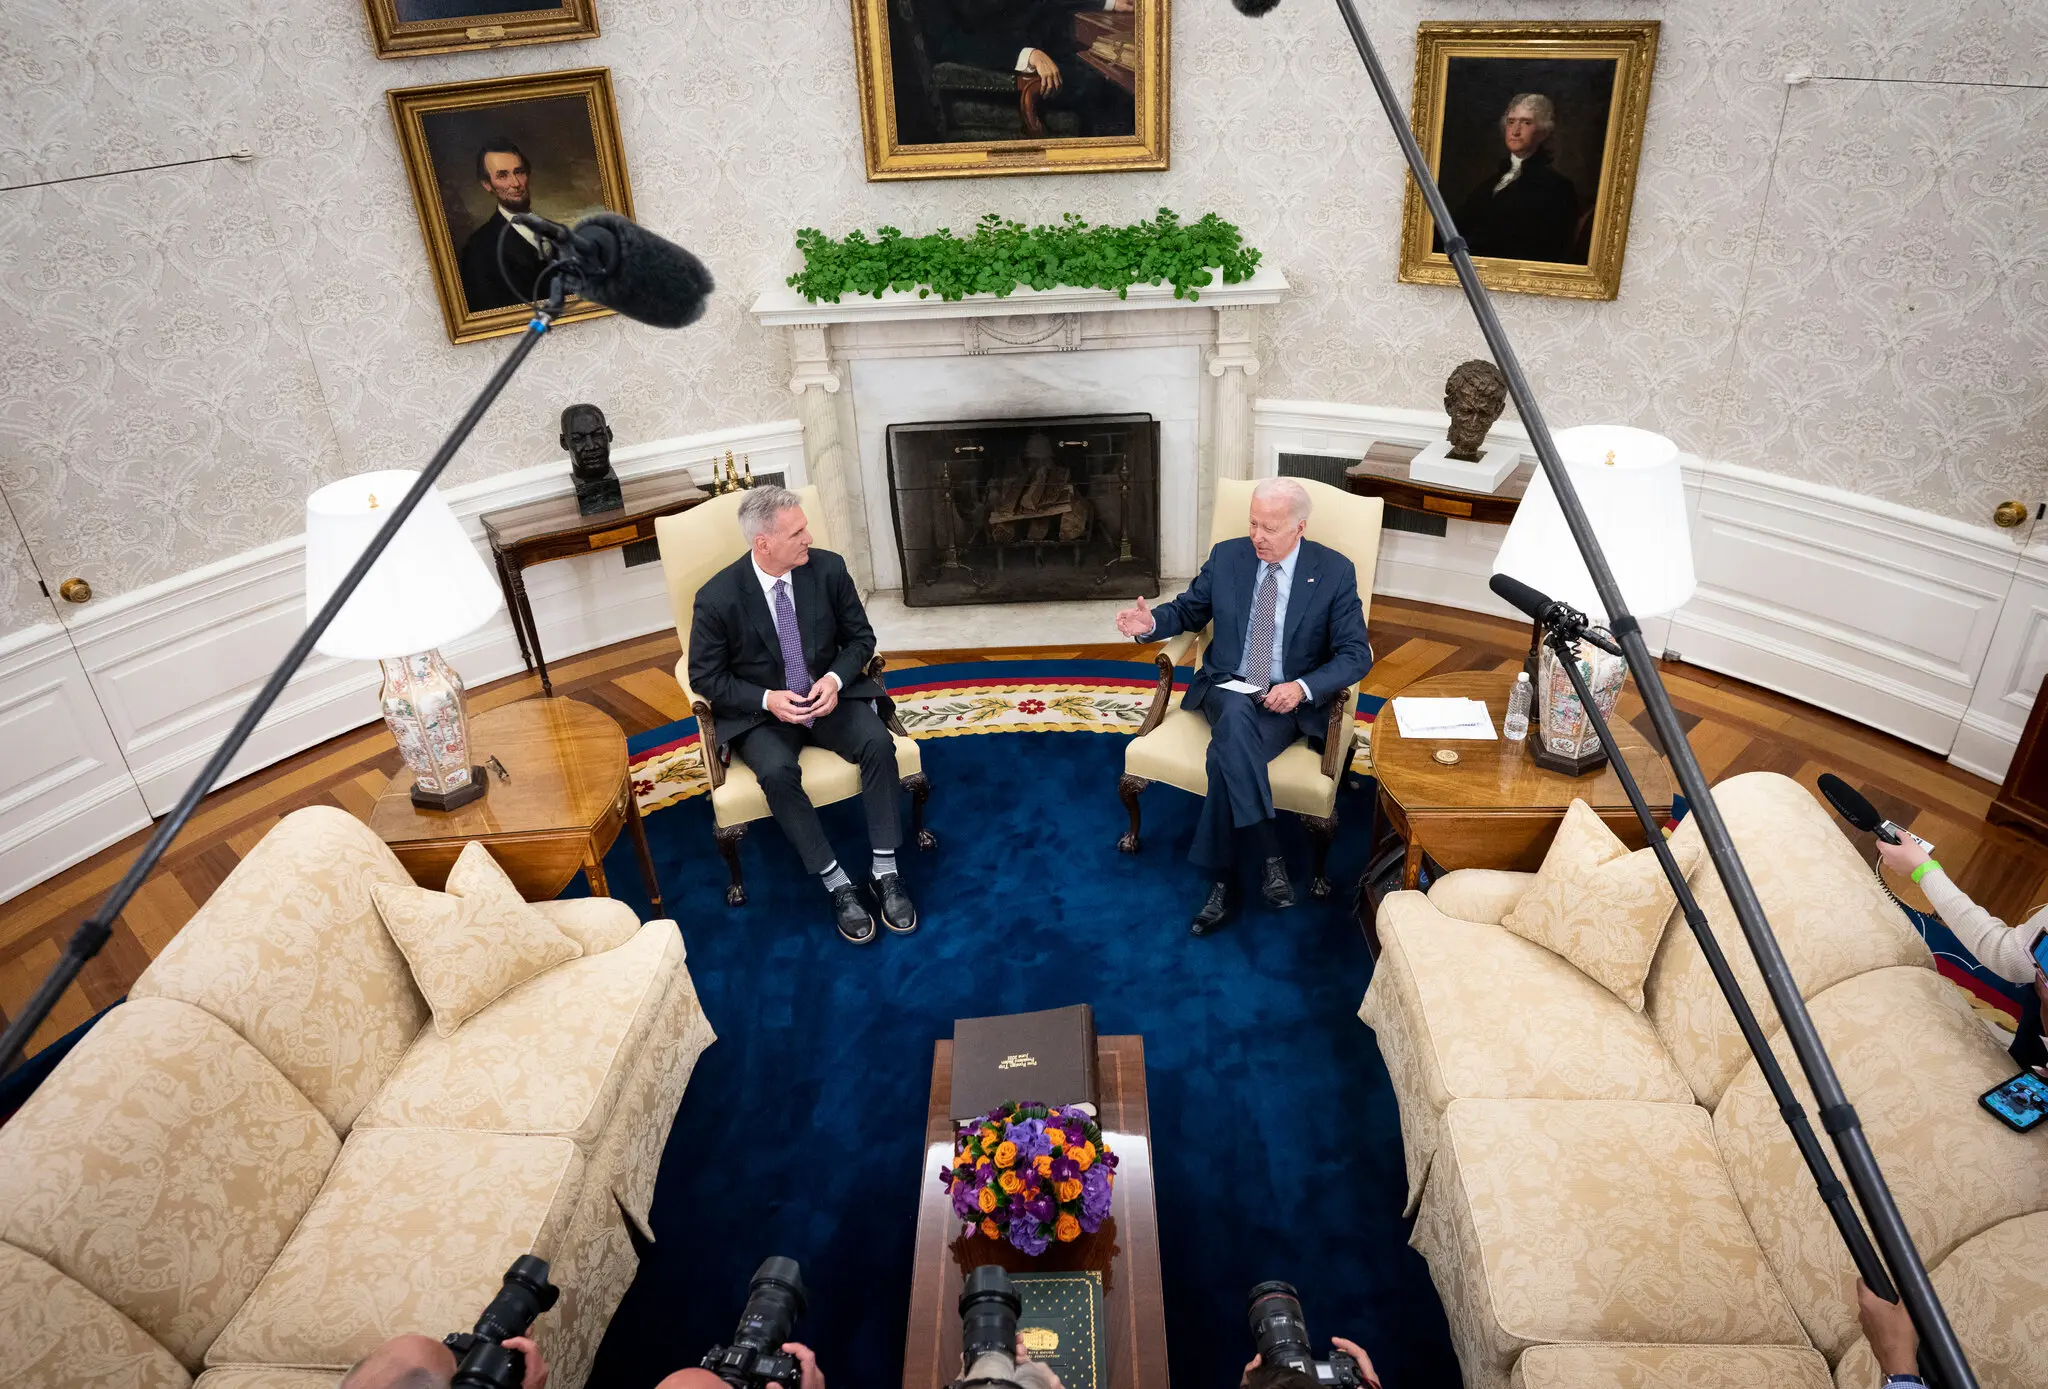 President Biden and Speaker McCarthy negotiating